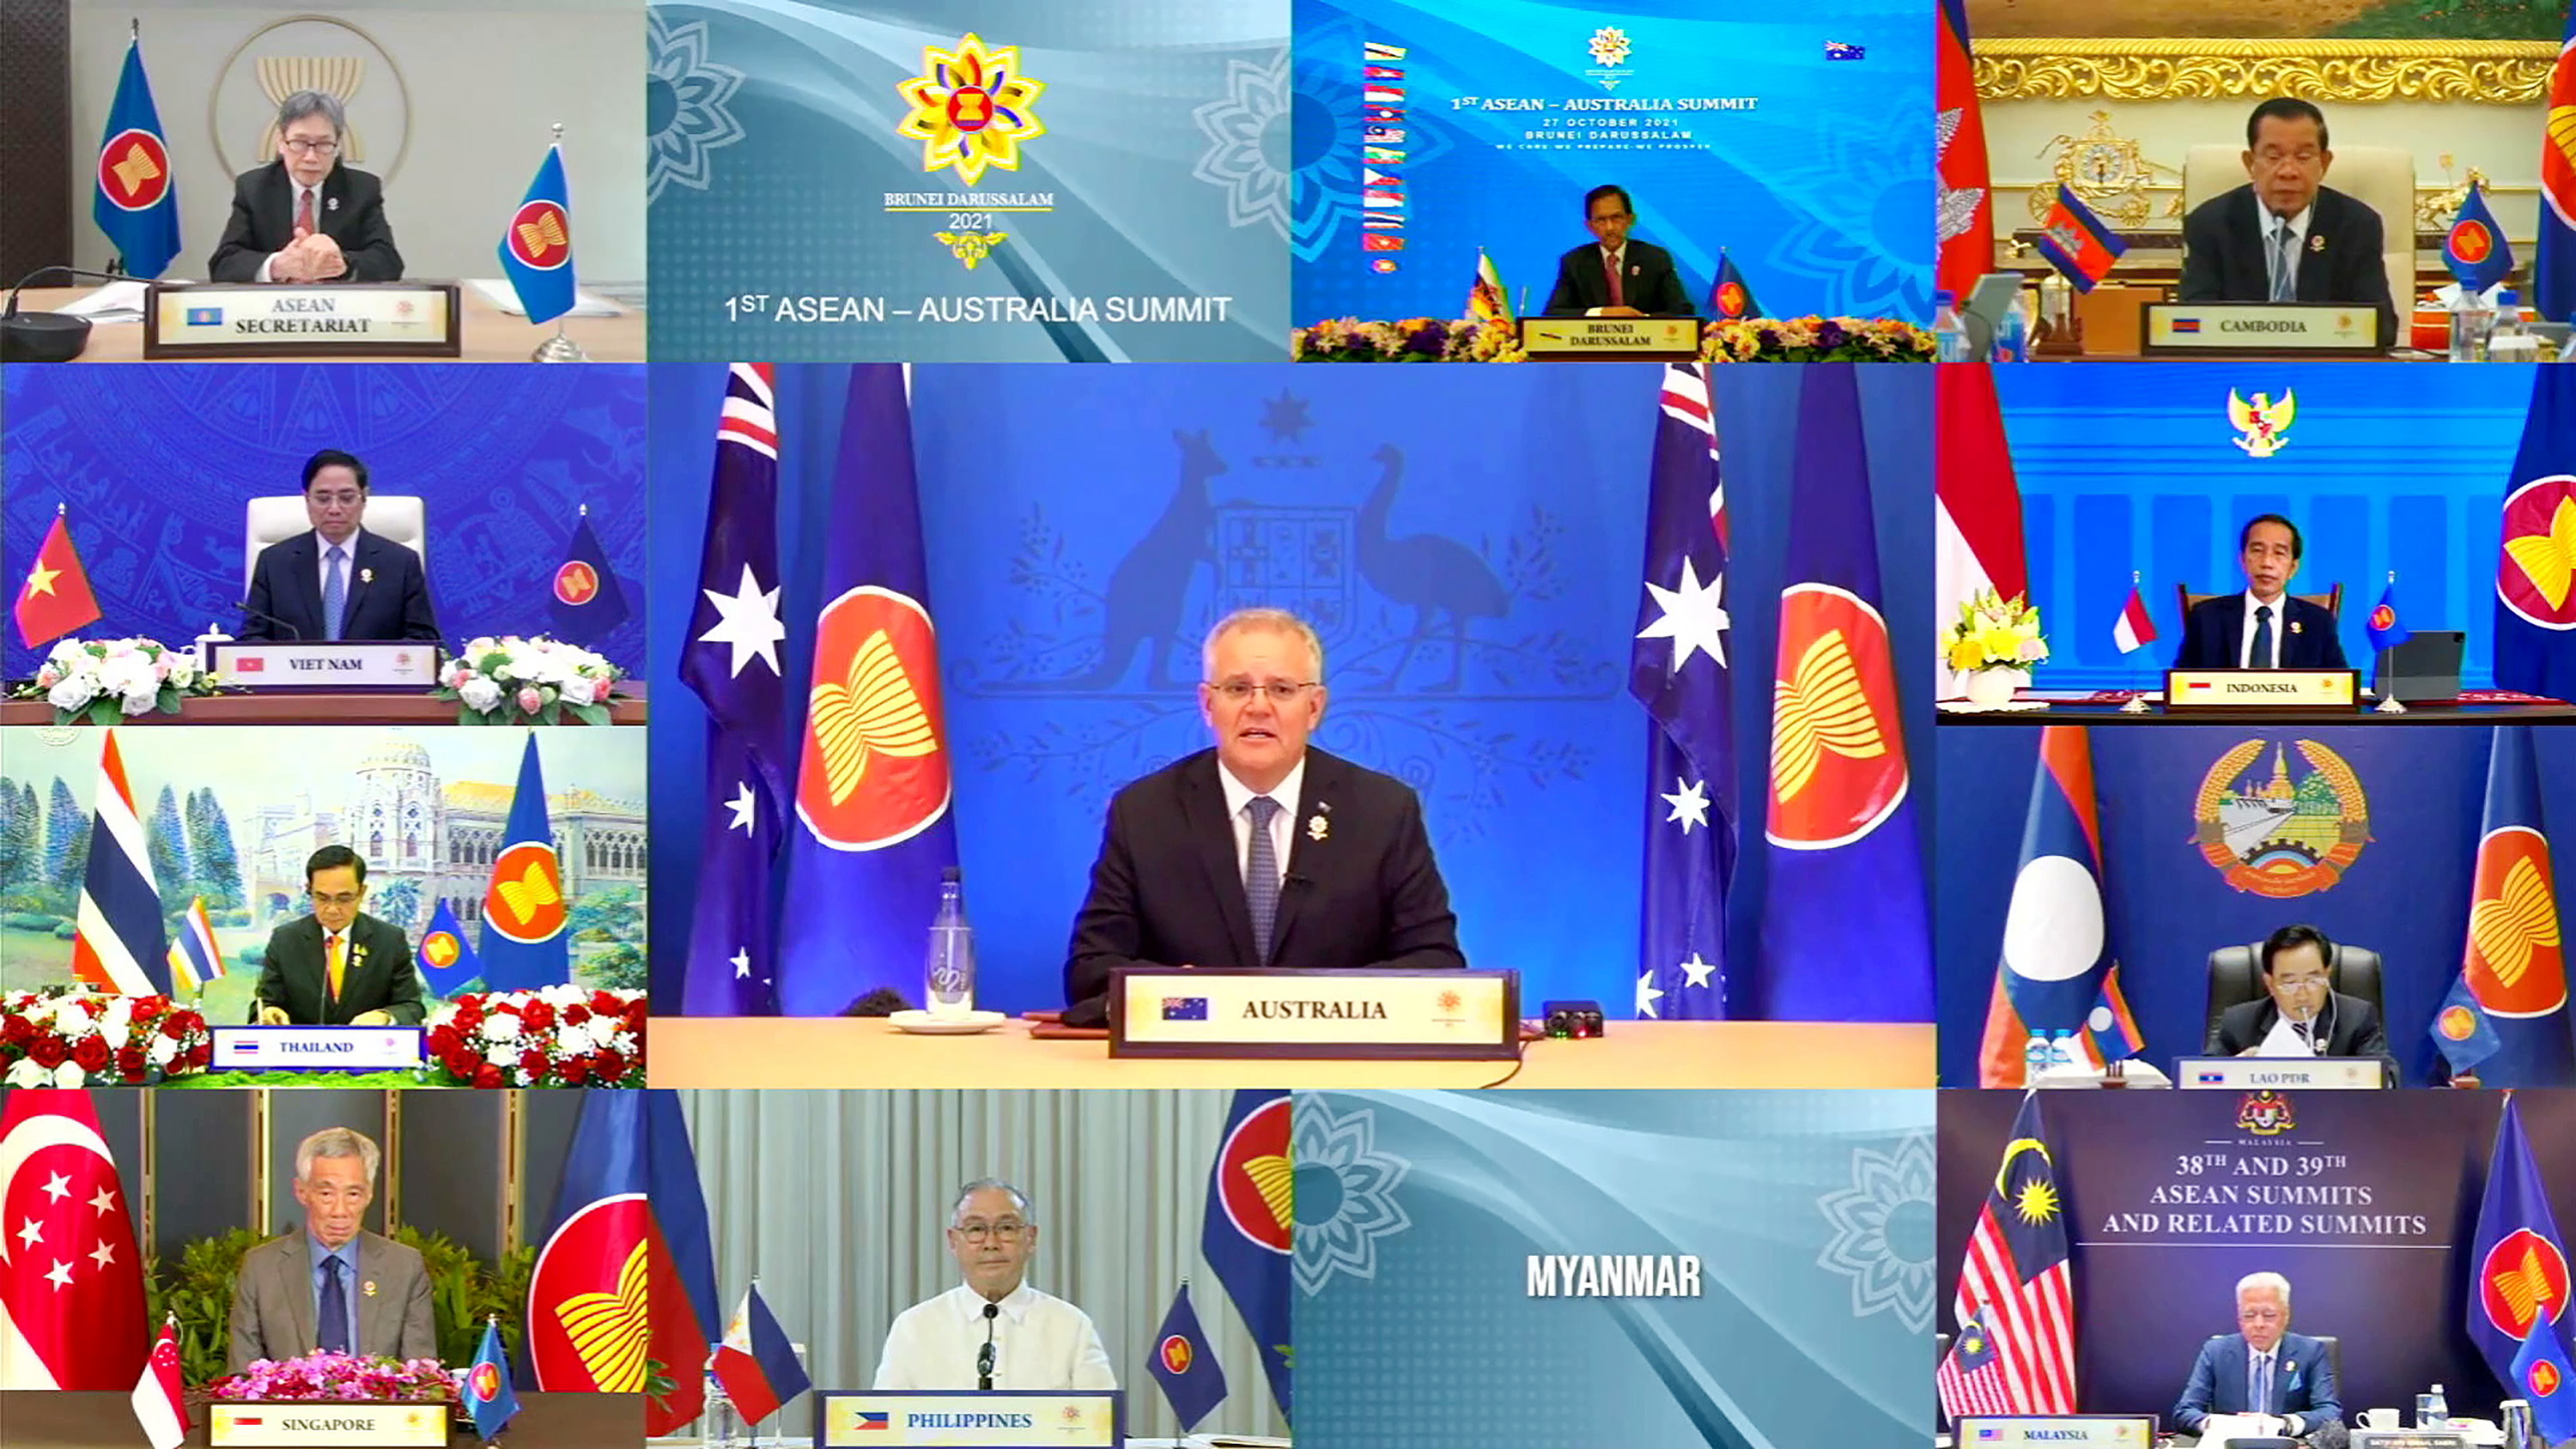 Australia's Prime Minister Scott Morrison speaks during the virtual ASEAN Australia Summit, hosted by ASEAN Summit Brunei, in Bandar Seri Begawan